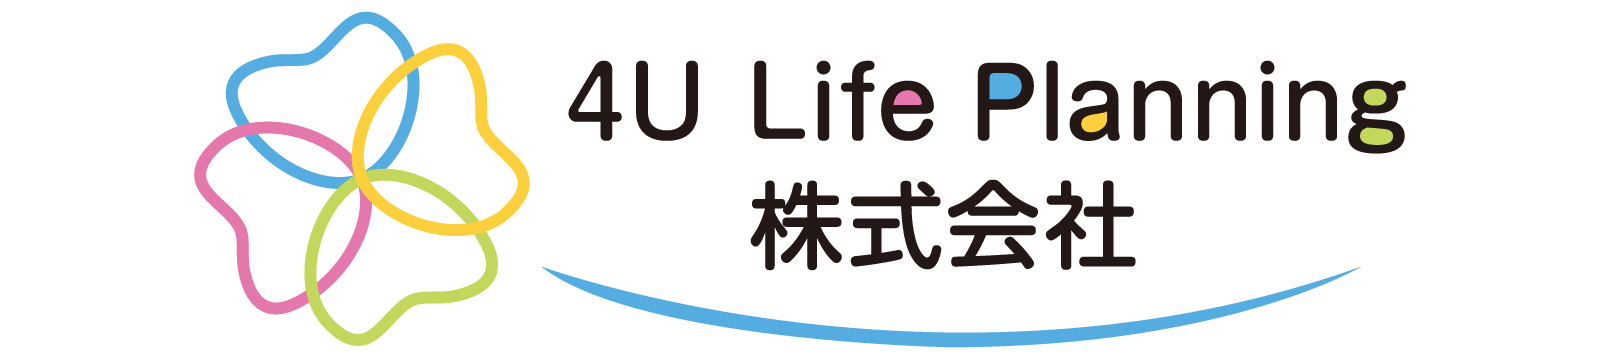 4 U Life Planning 株式会社(フォーユーライフプランニング)-4ulp-